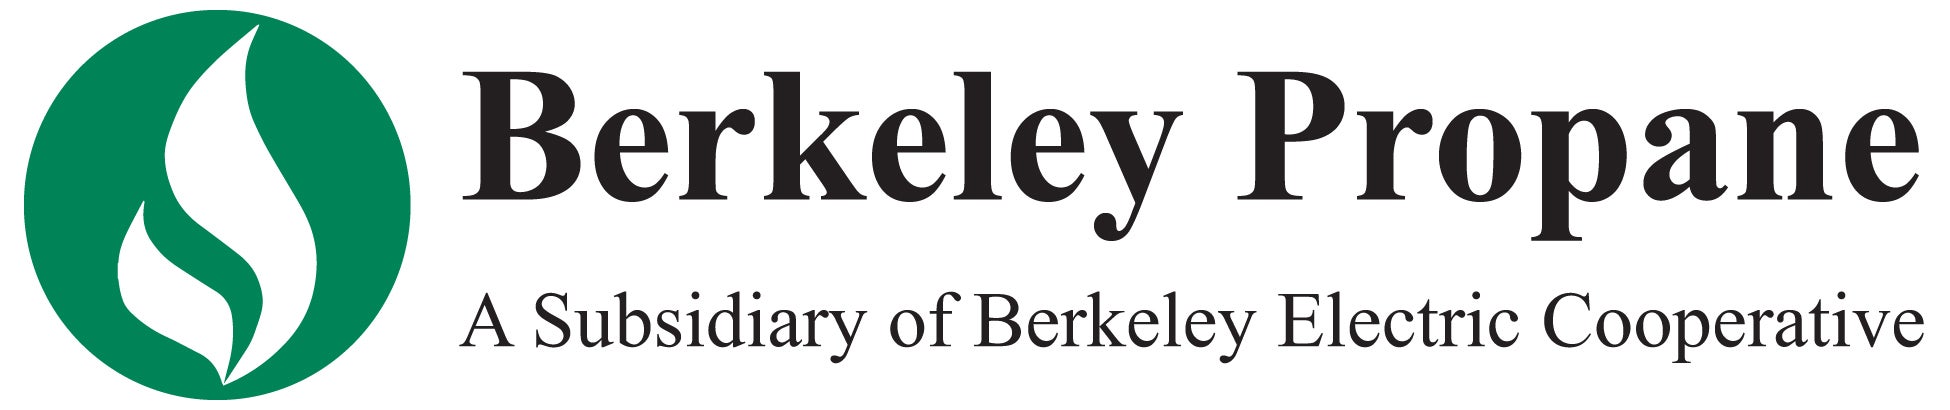 Berkeley Propane- landscape.jpg